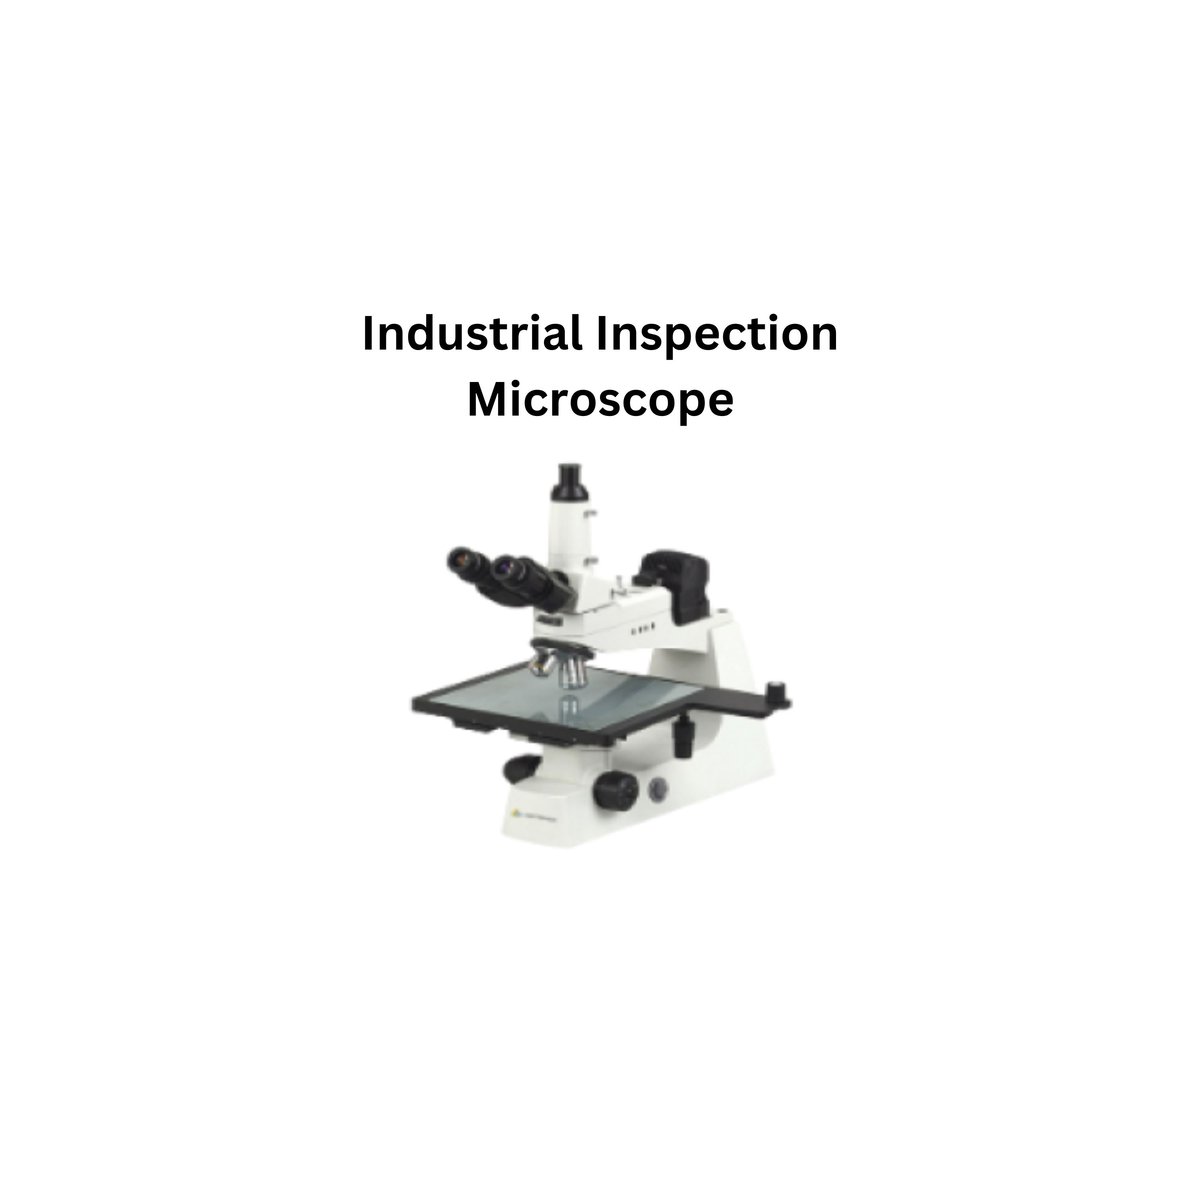 Industrial Inspection Microscope.jpg